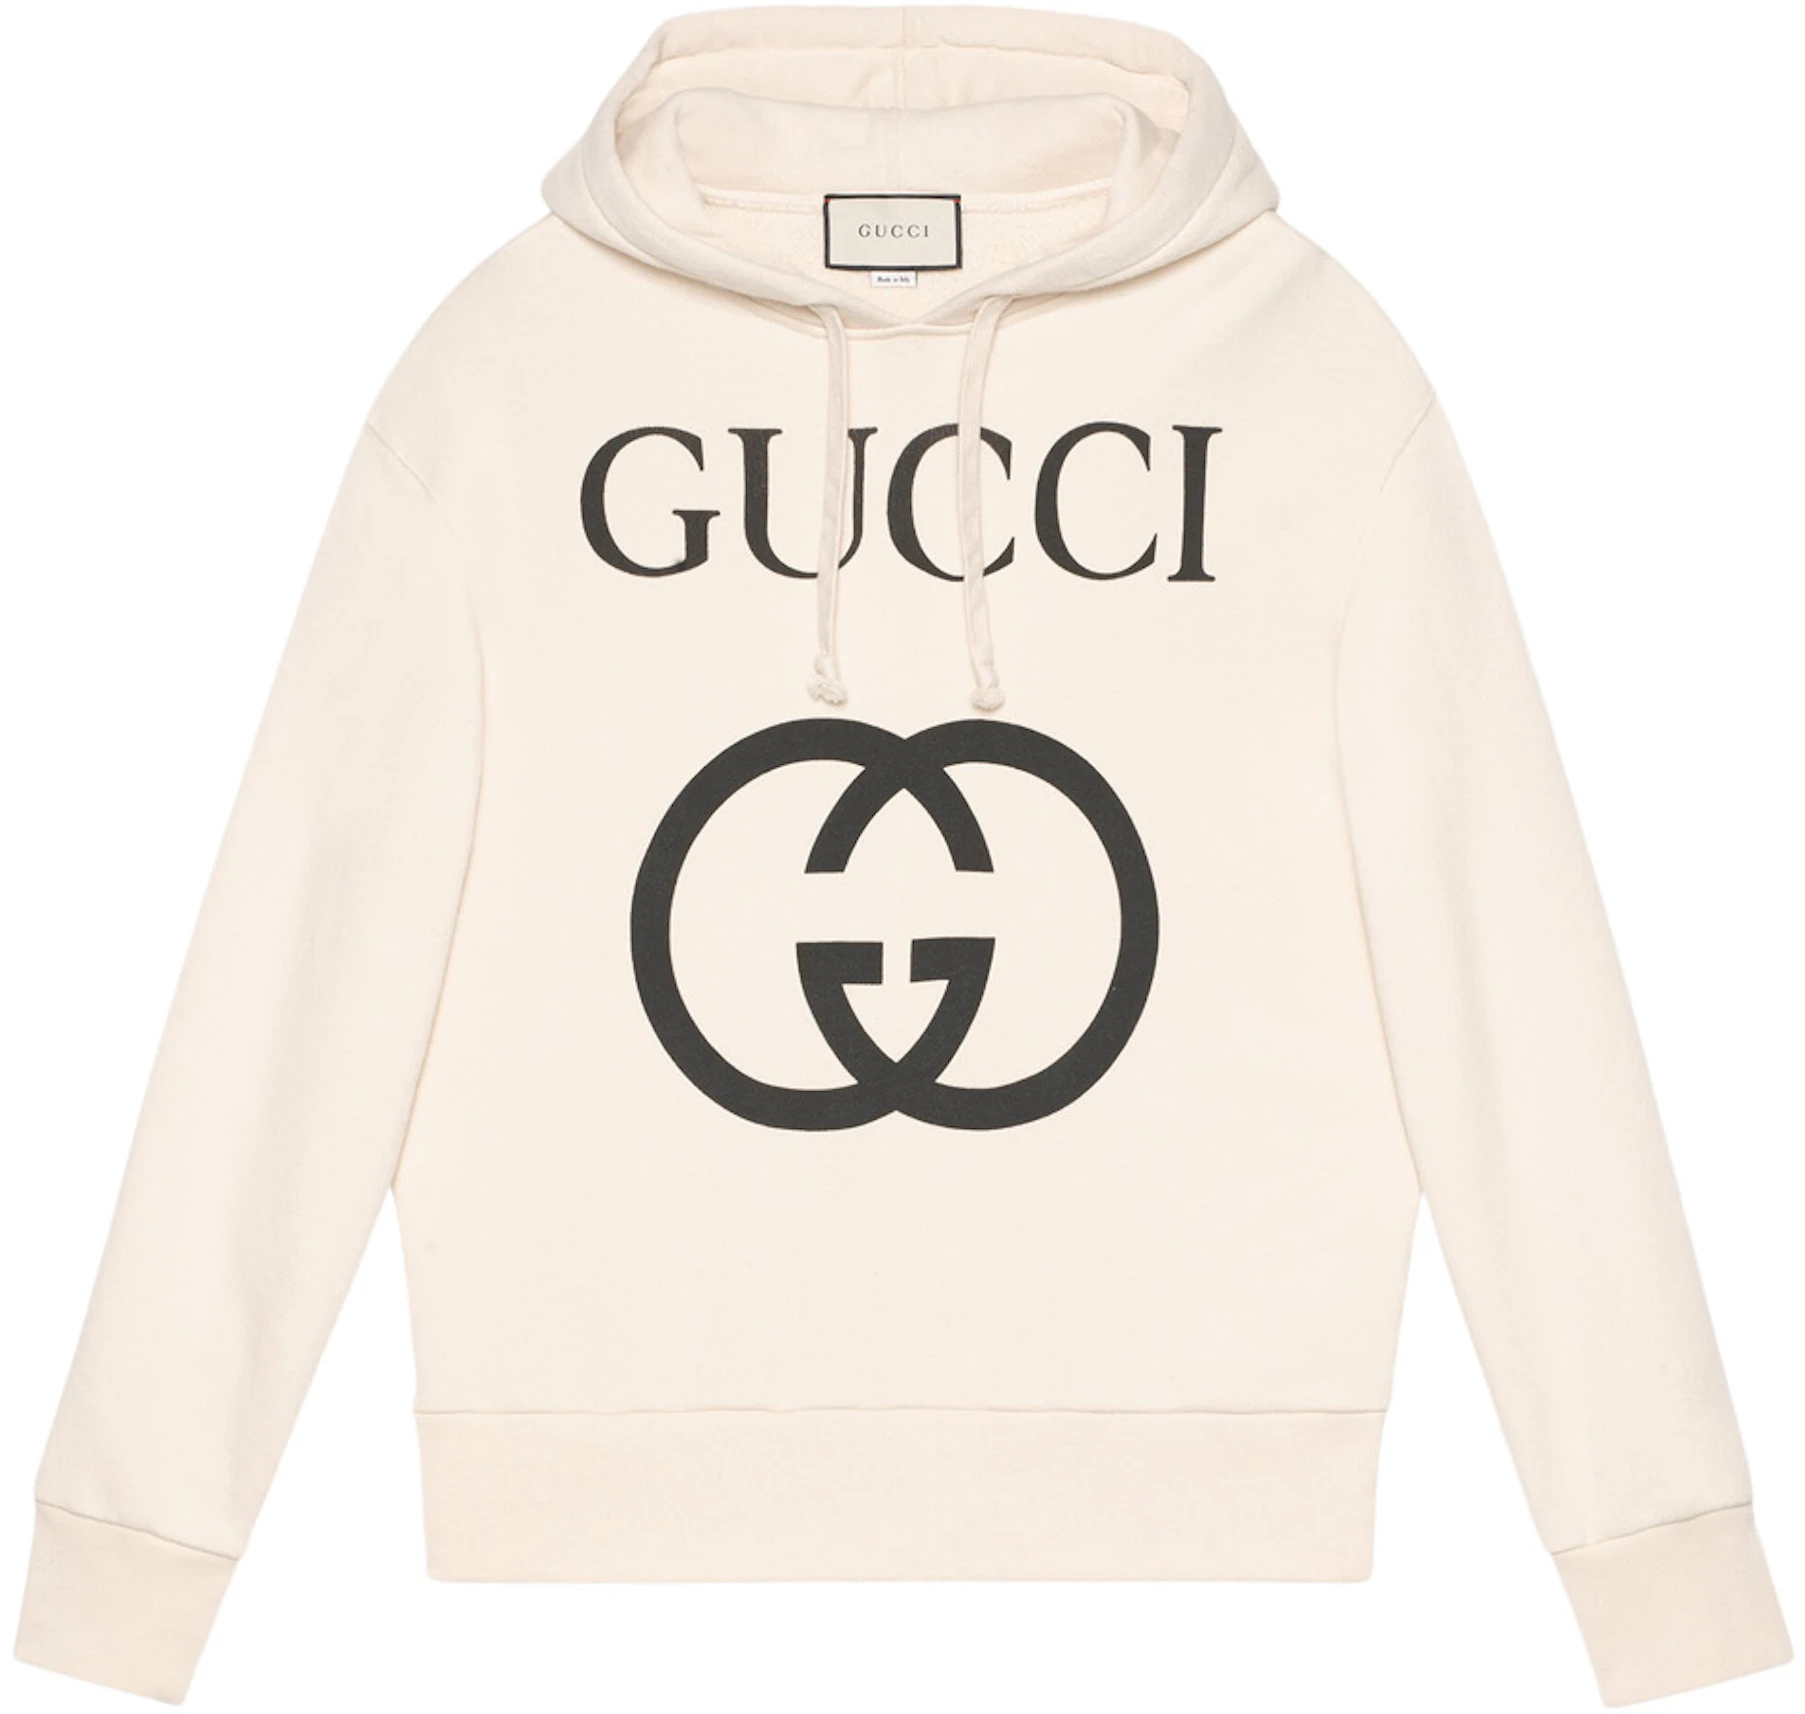 Gucci Interlocking G Oversize Fit Hoodie Off-White/Black - FW22 - US